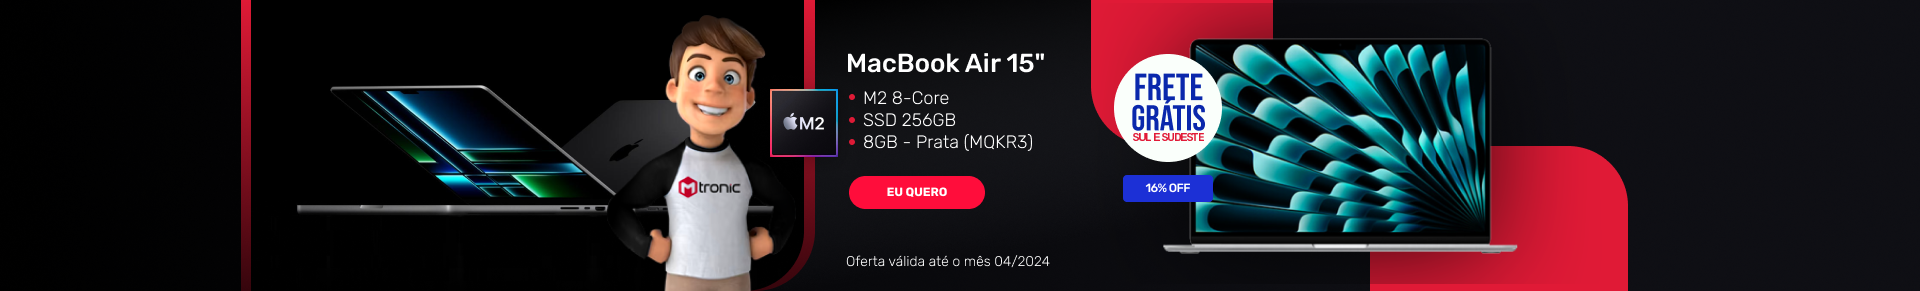 Ofertas Abril 2024 - MacBook Air 15